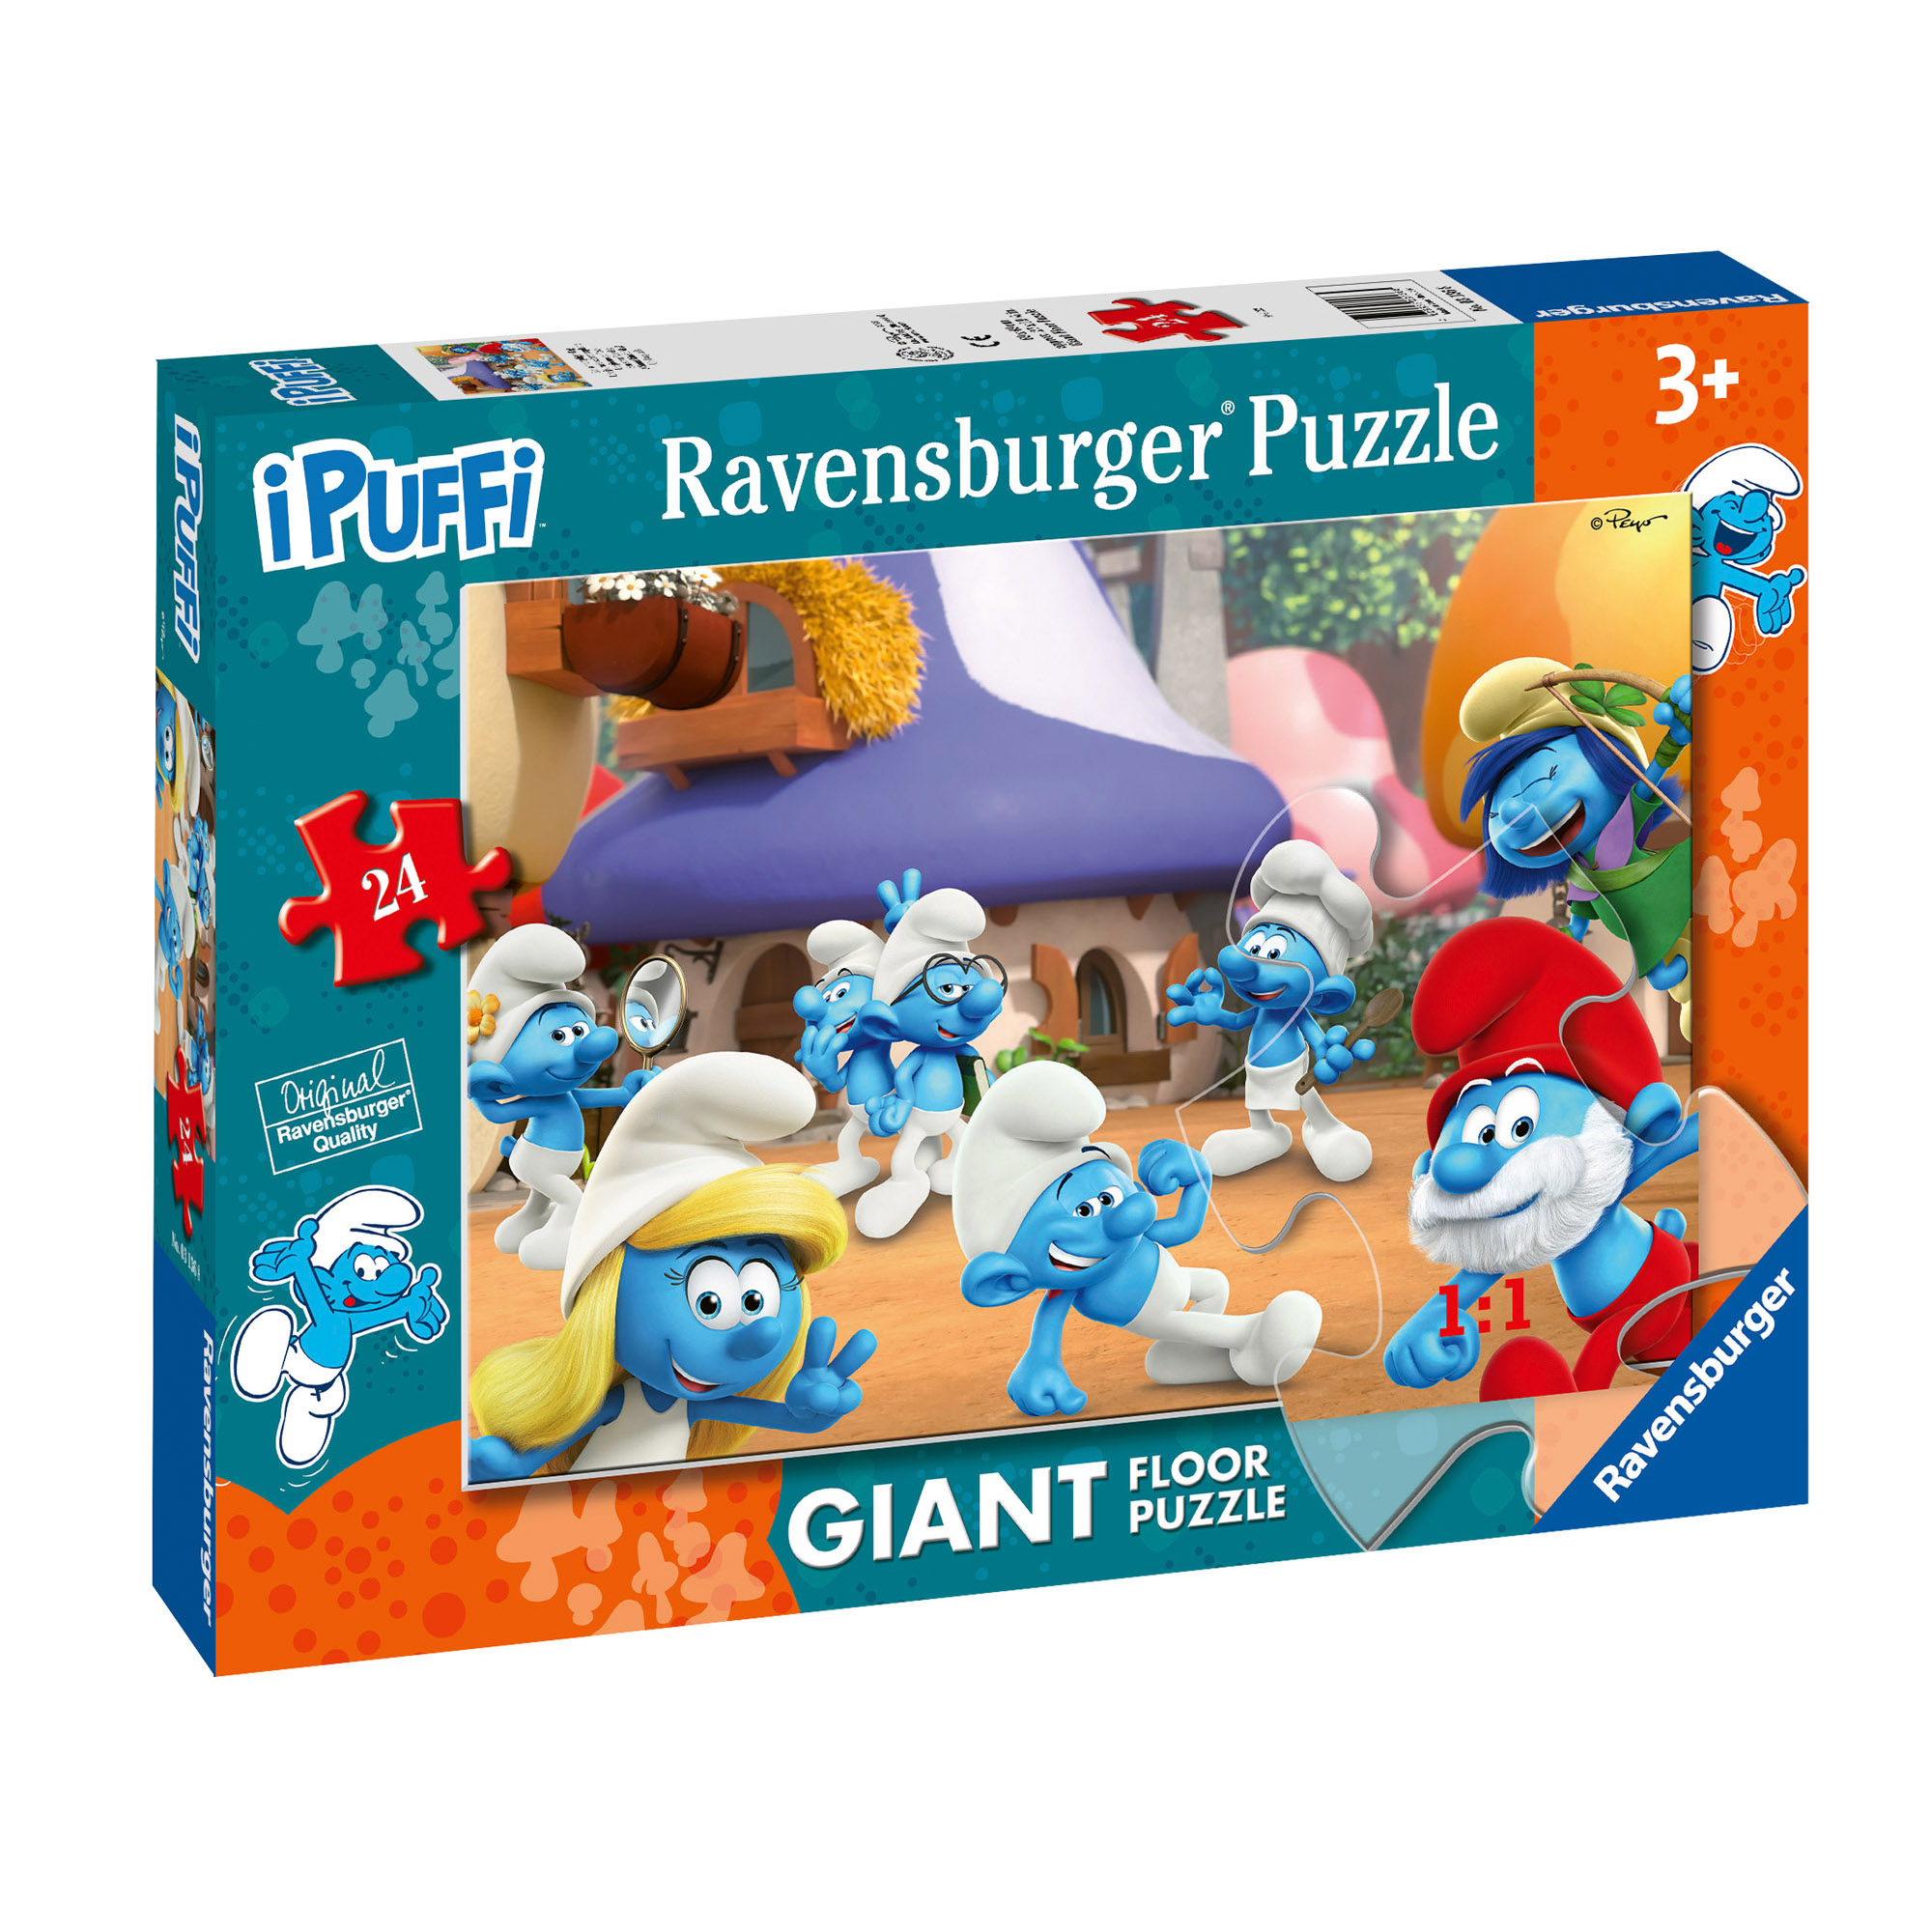 Ravensburger - puzzle i puffi, collezione 24 giant pavimento, 24 pezzi, età raccomandata 3+ anni - RAVENSBURGER